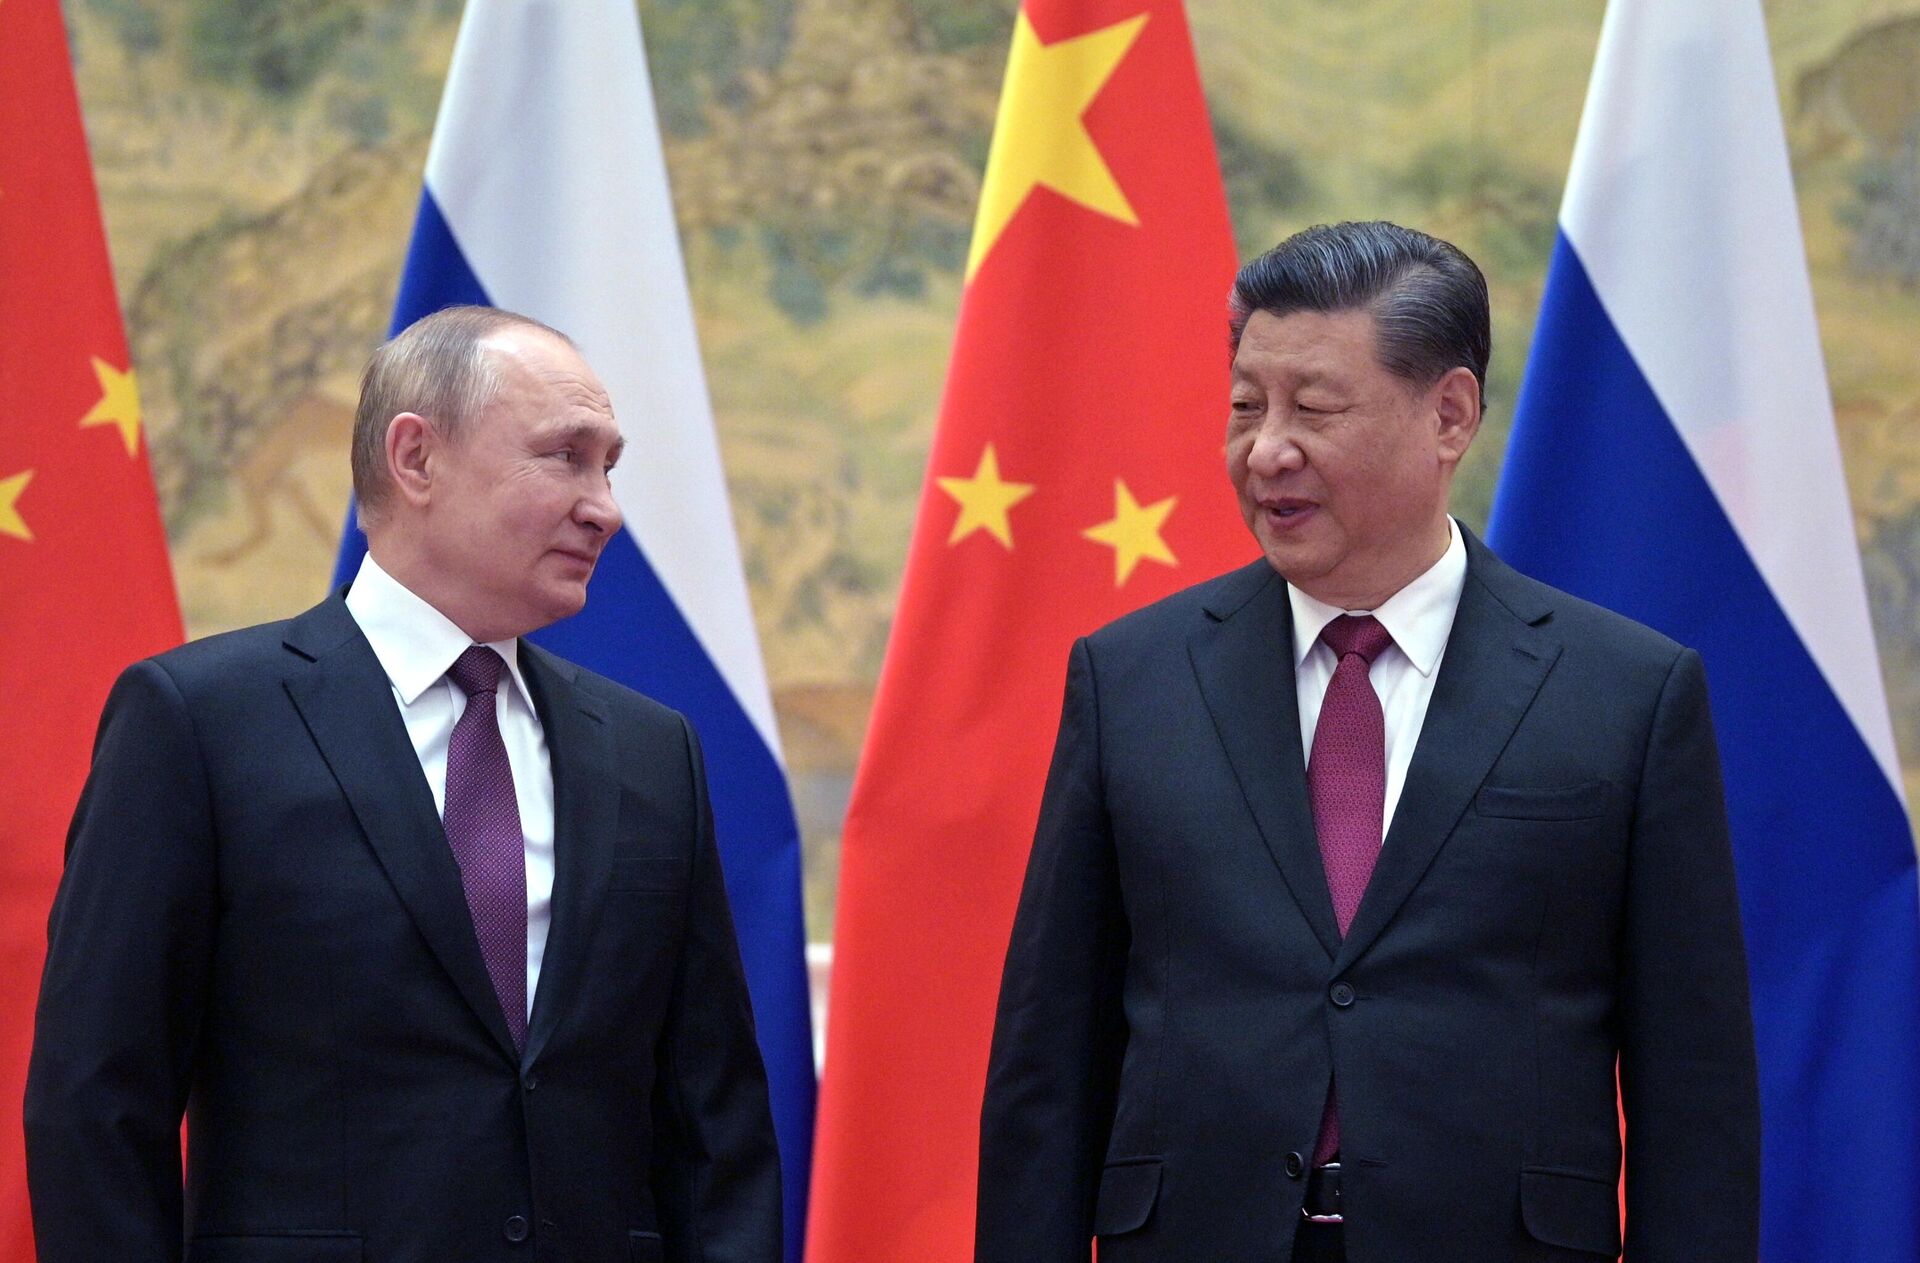 Russian President Vladimir Putin, left, and Chinese President Xi Jinping pose during their meeting at the Diaoyutai State Guesthouse in Beijing, China. - Sputnik International, 1920, 18.09.2022